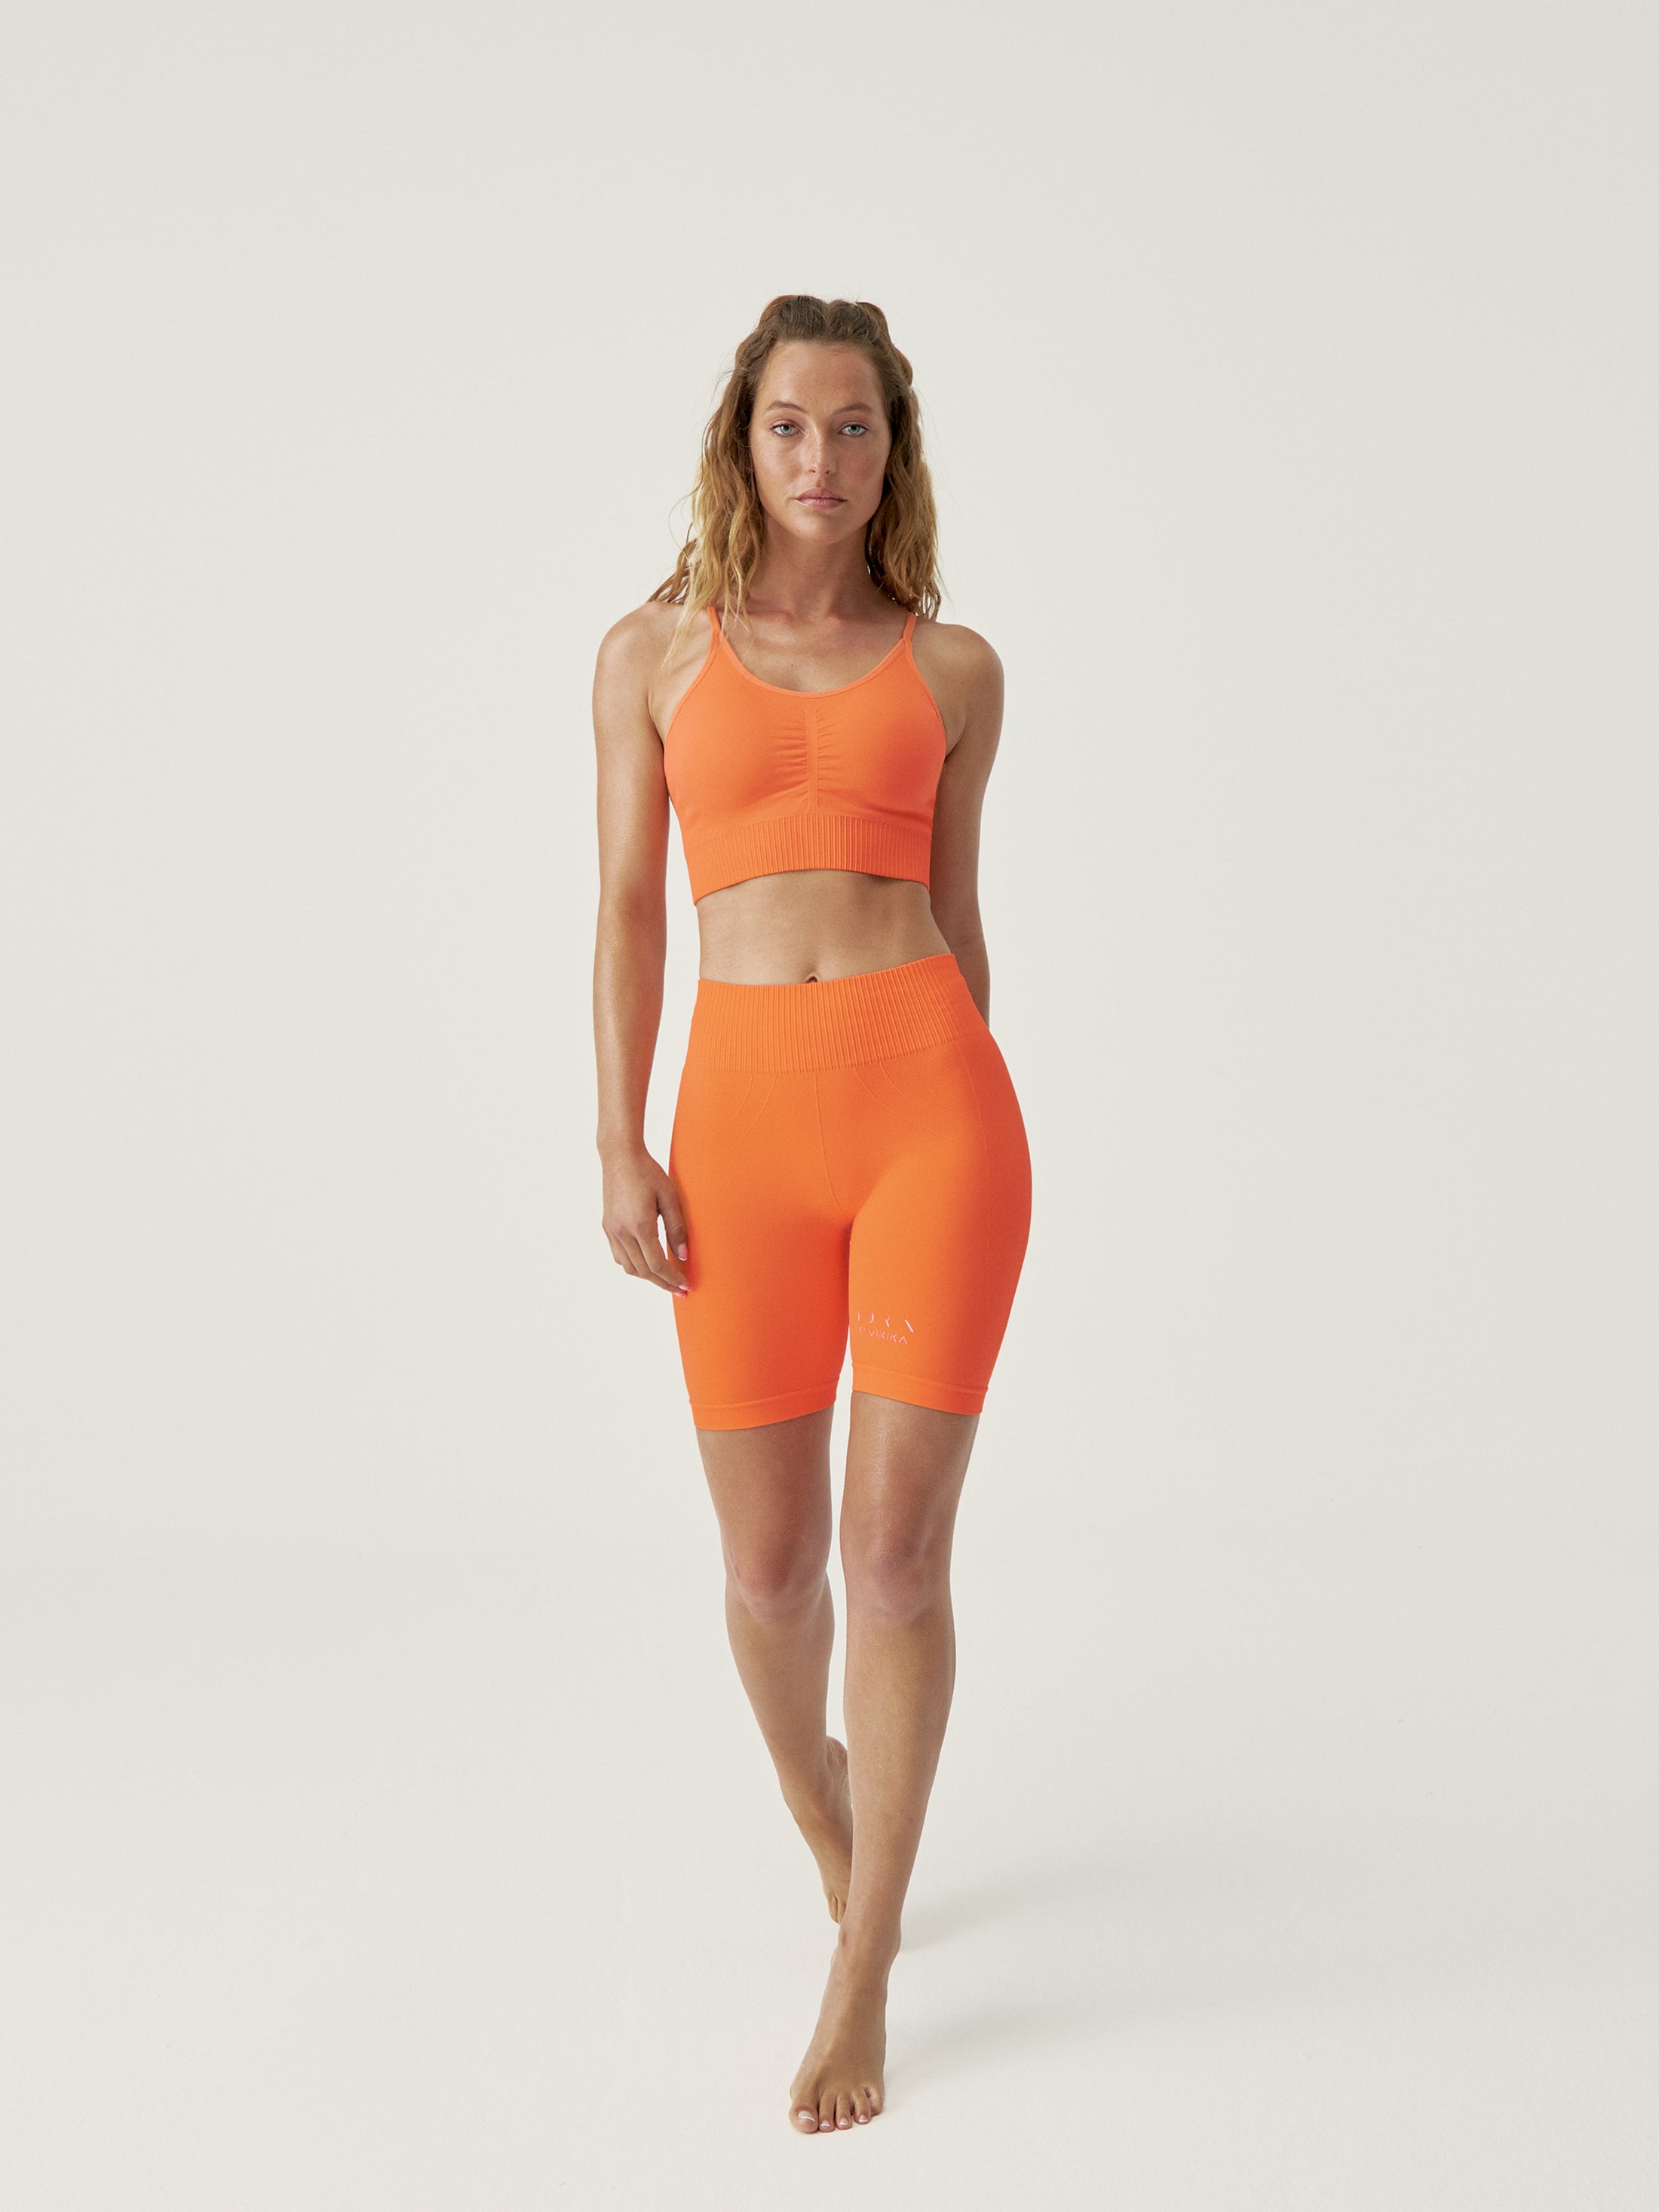 Unity Shorts in Tangerine